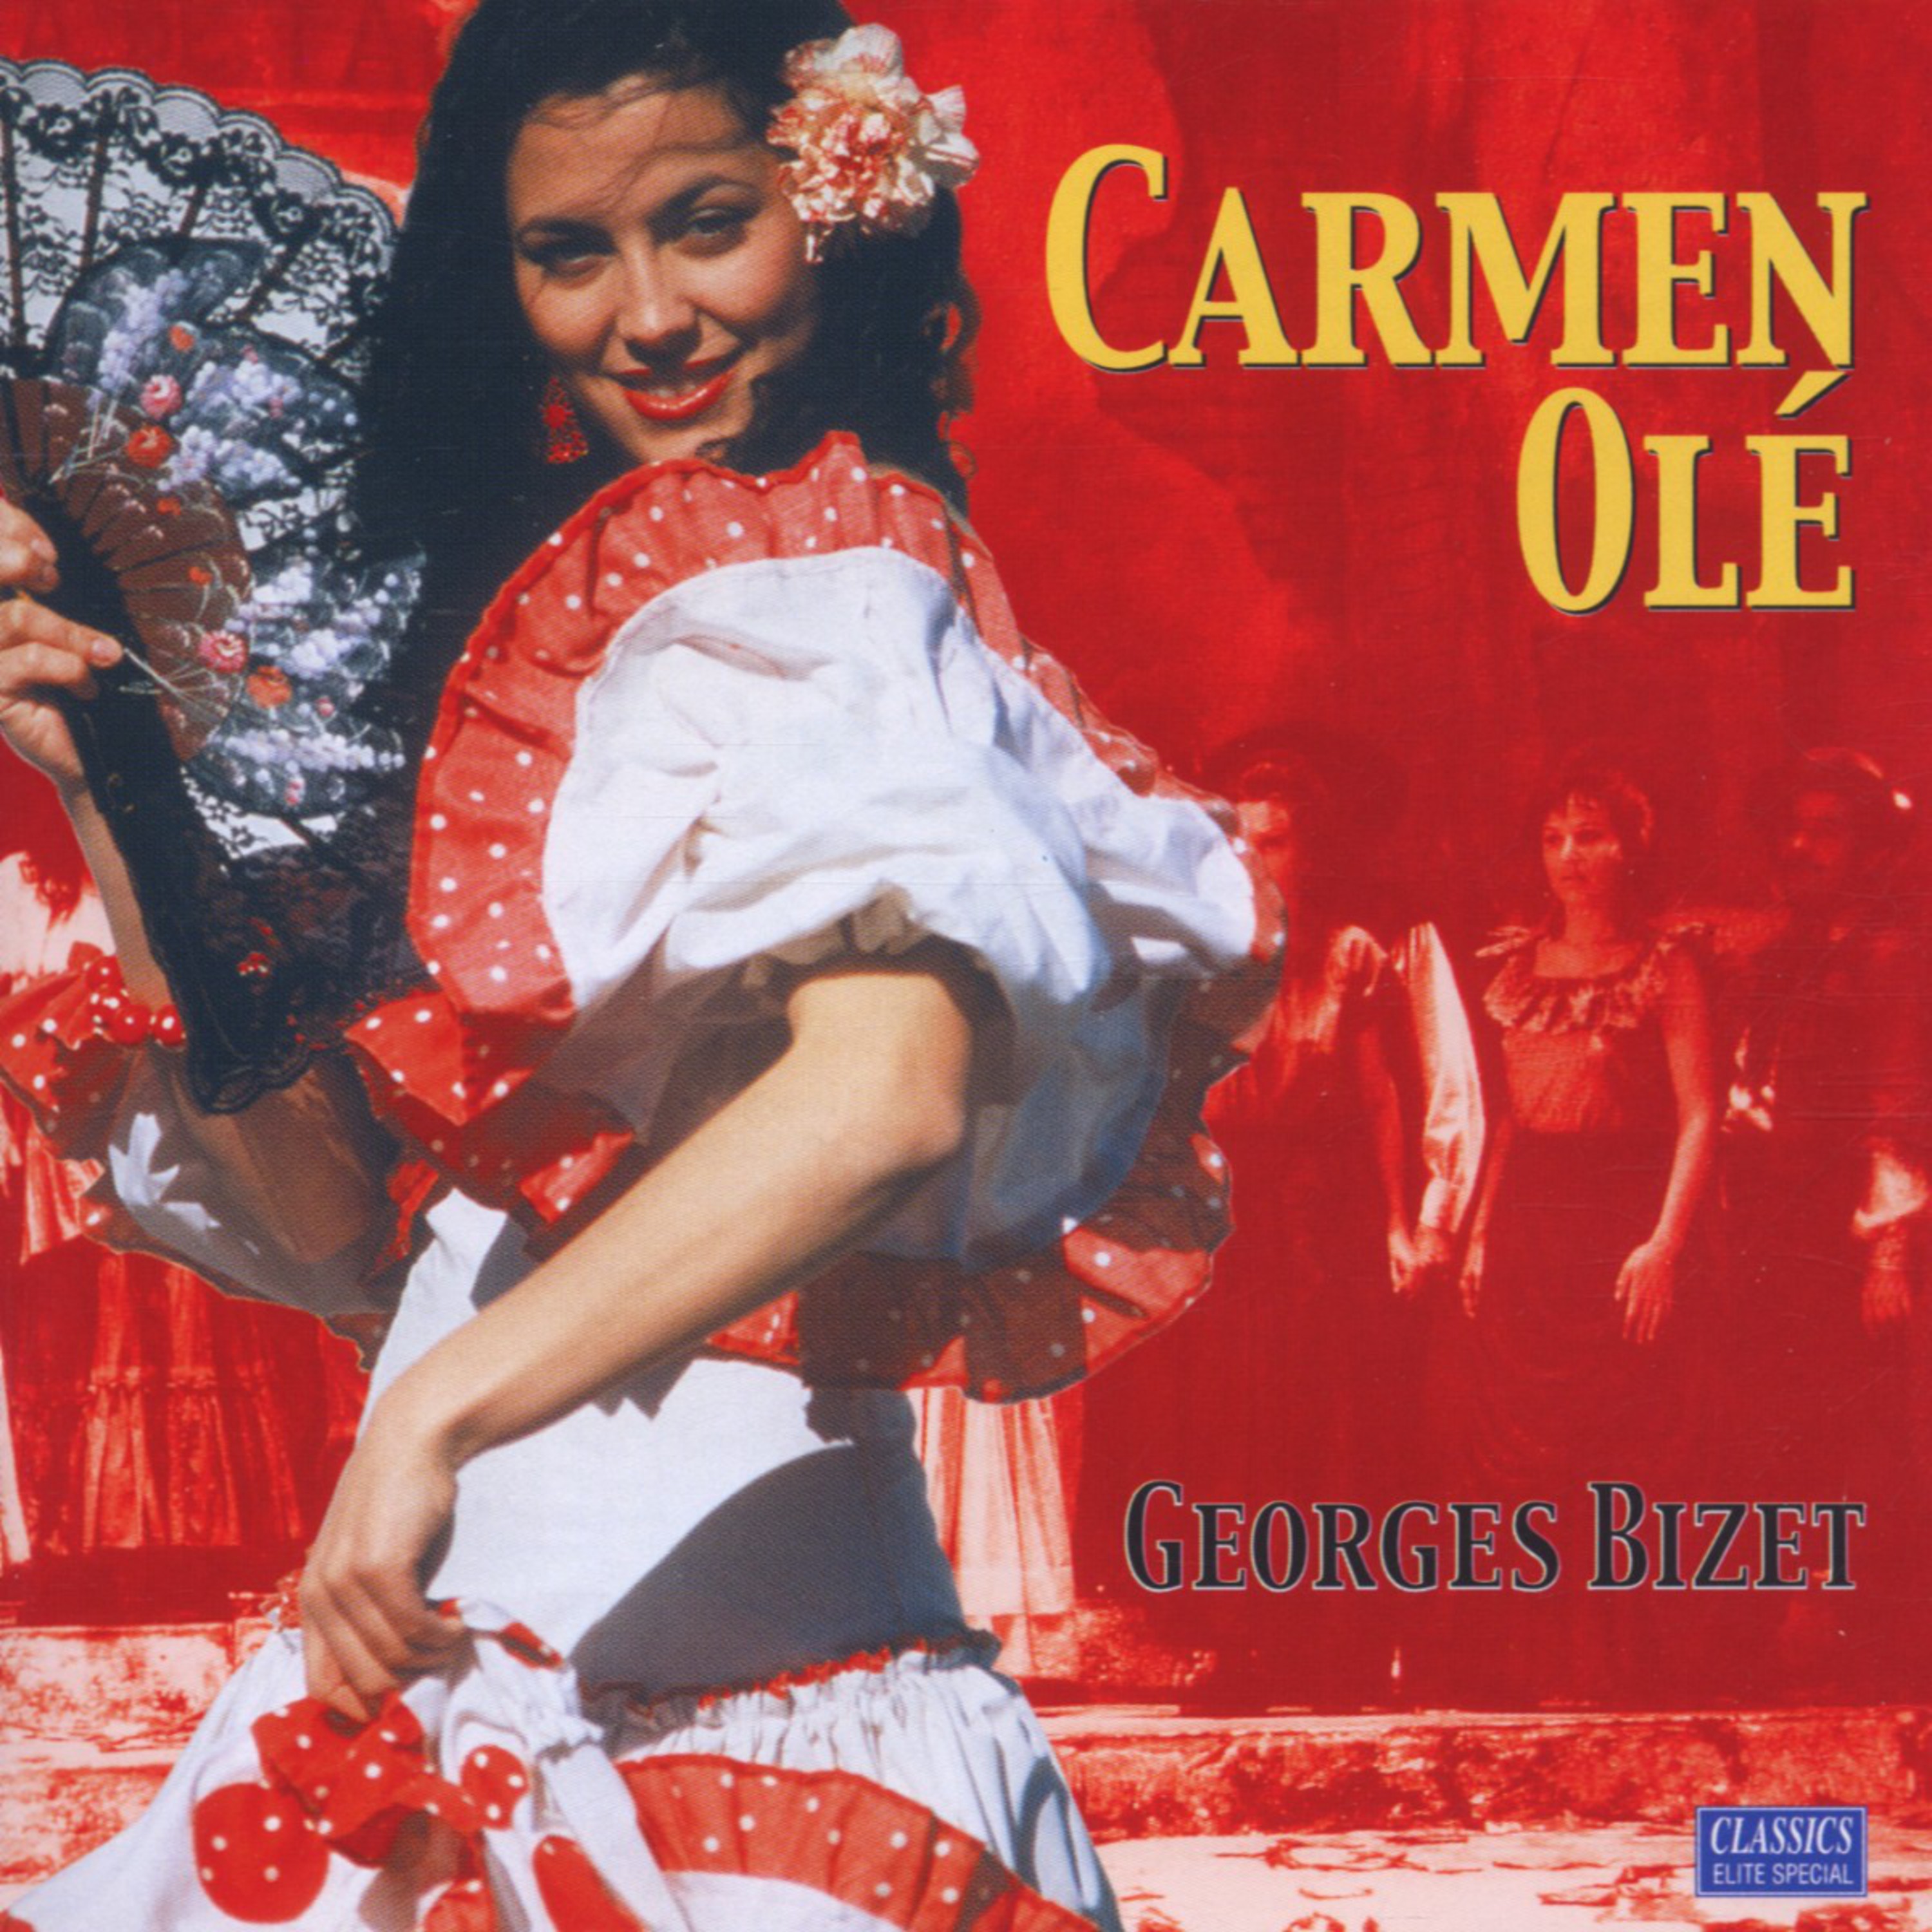 Carmen Suite Nr. 1 - Intermezzo - Prelude Act 3